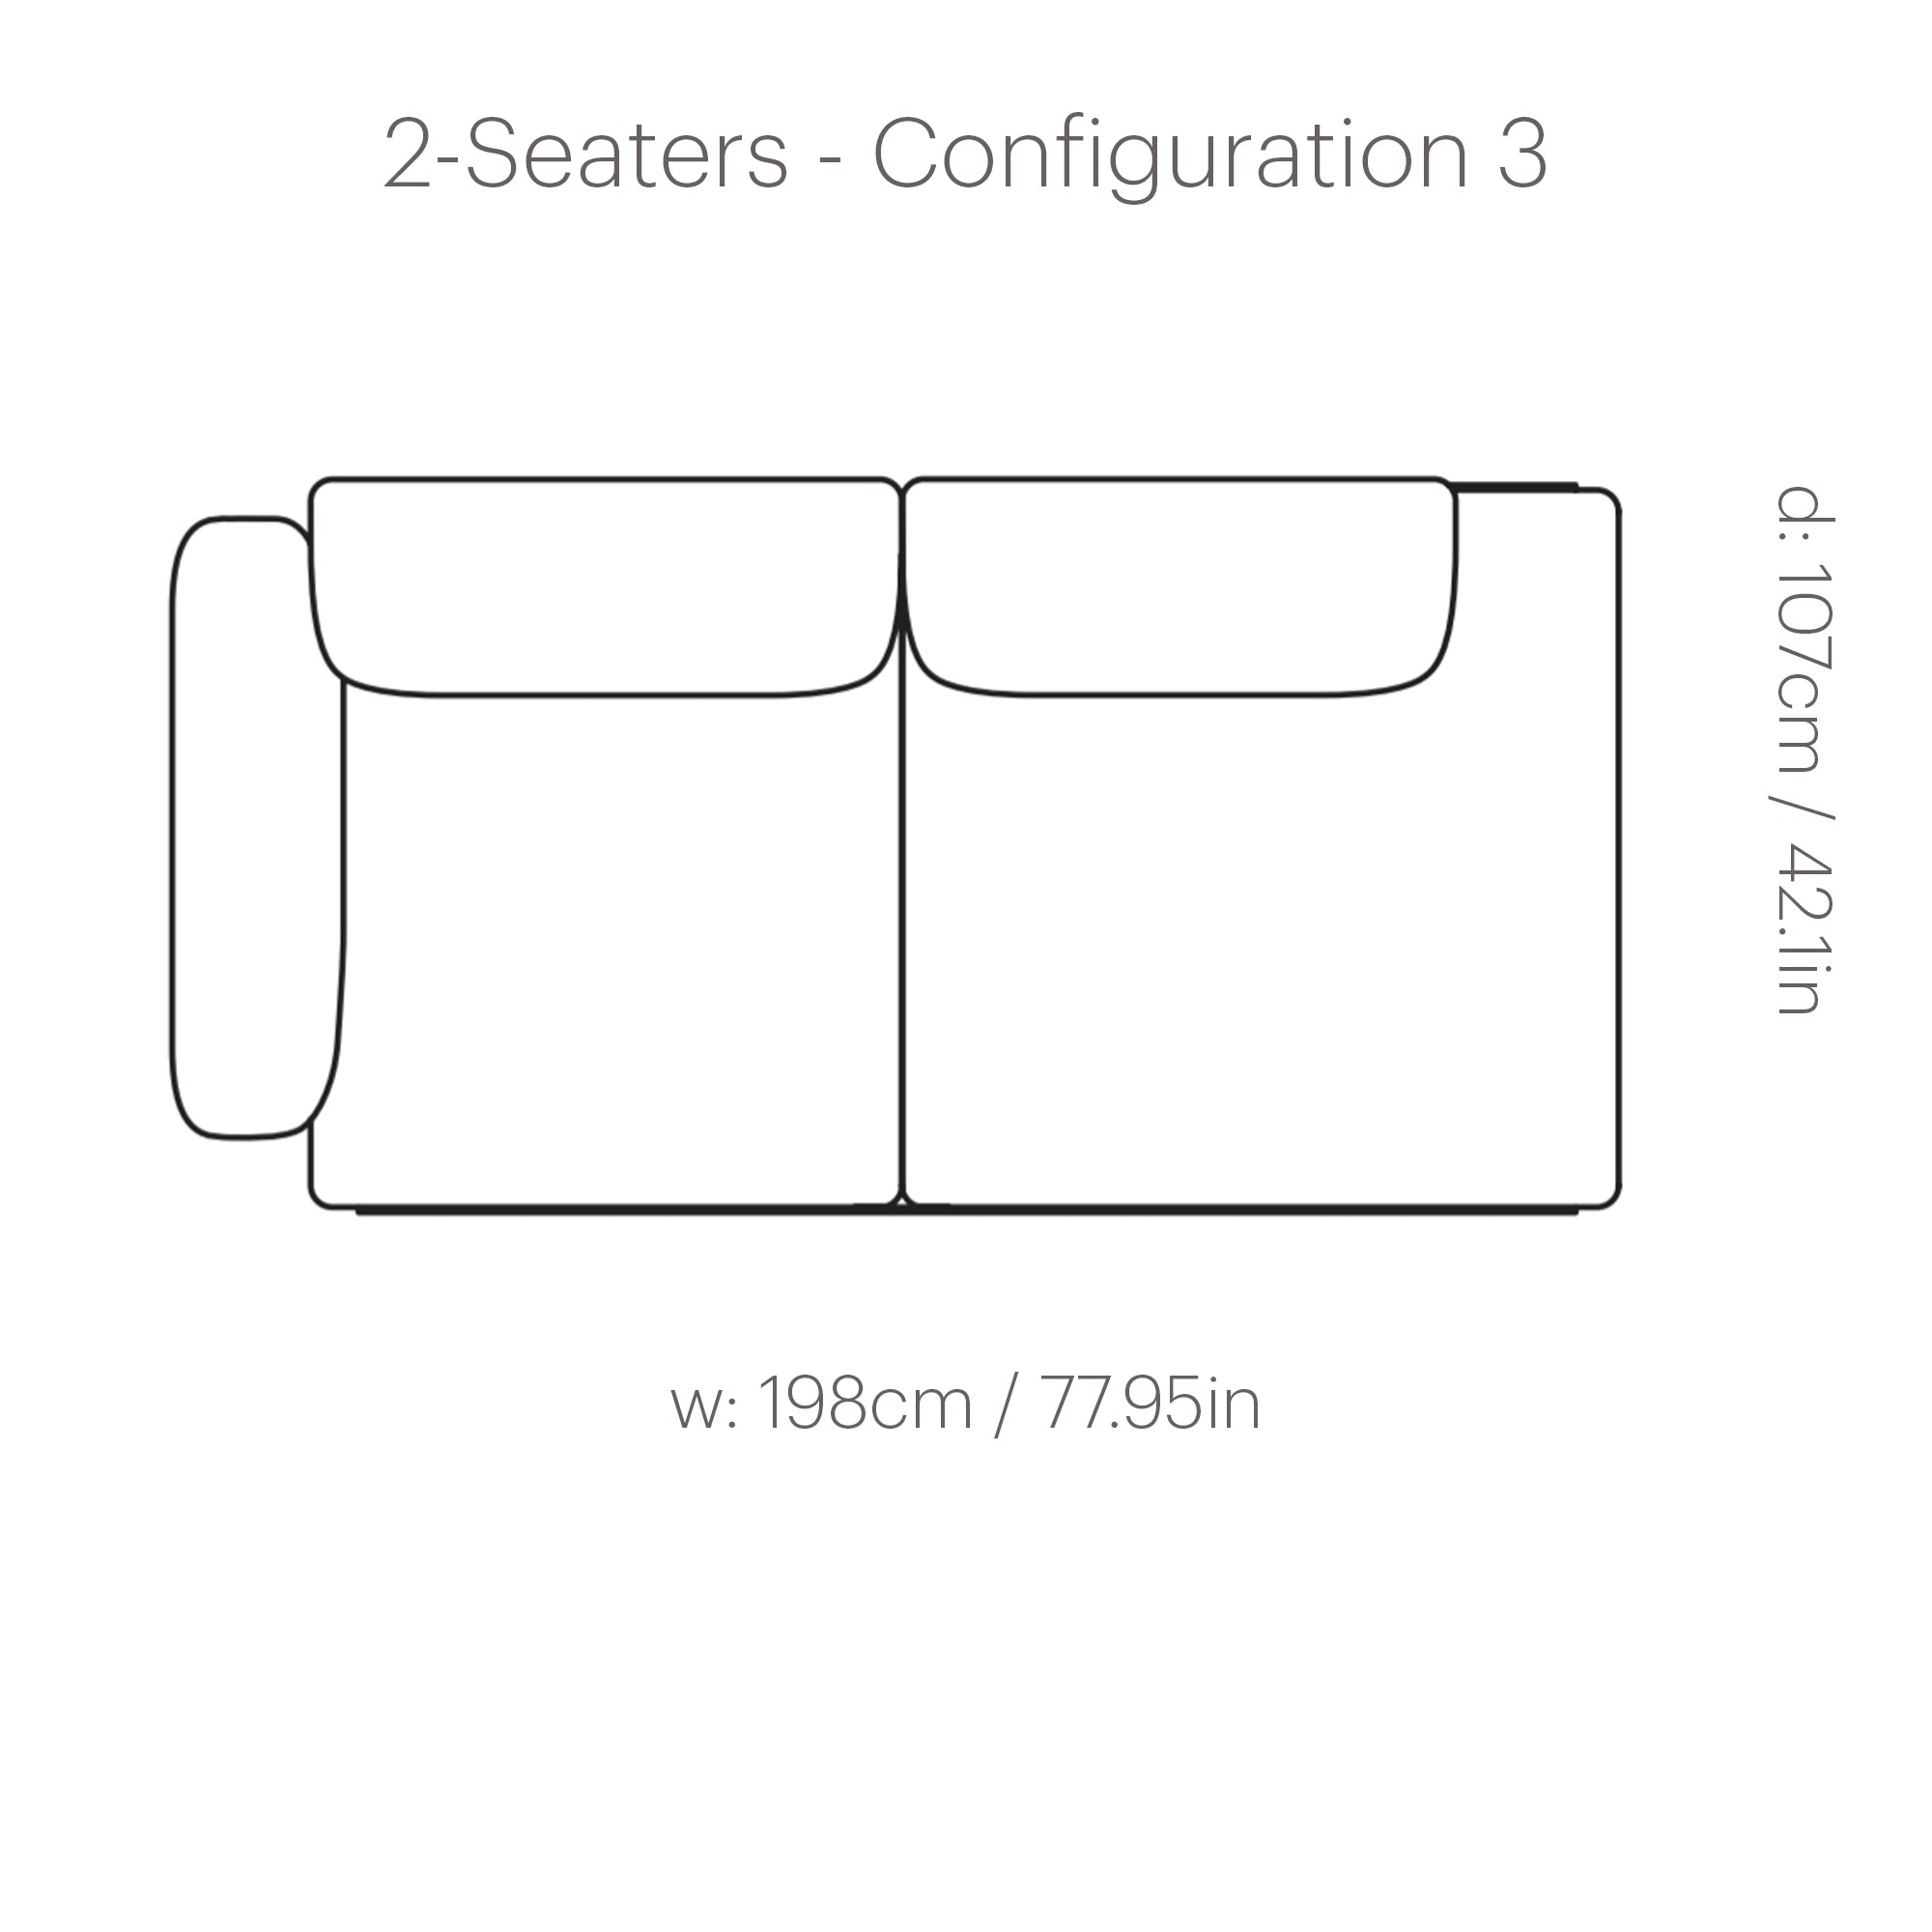 In Situ Modular Sofa: 2 Seater + Configuration 3